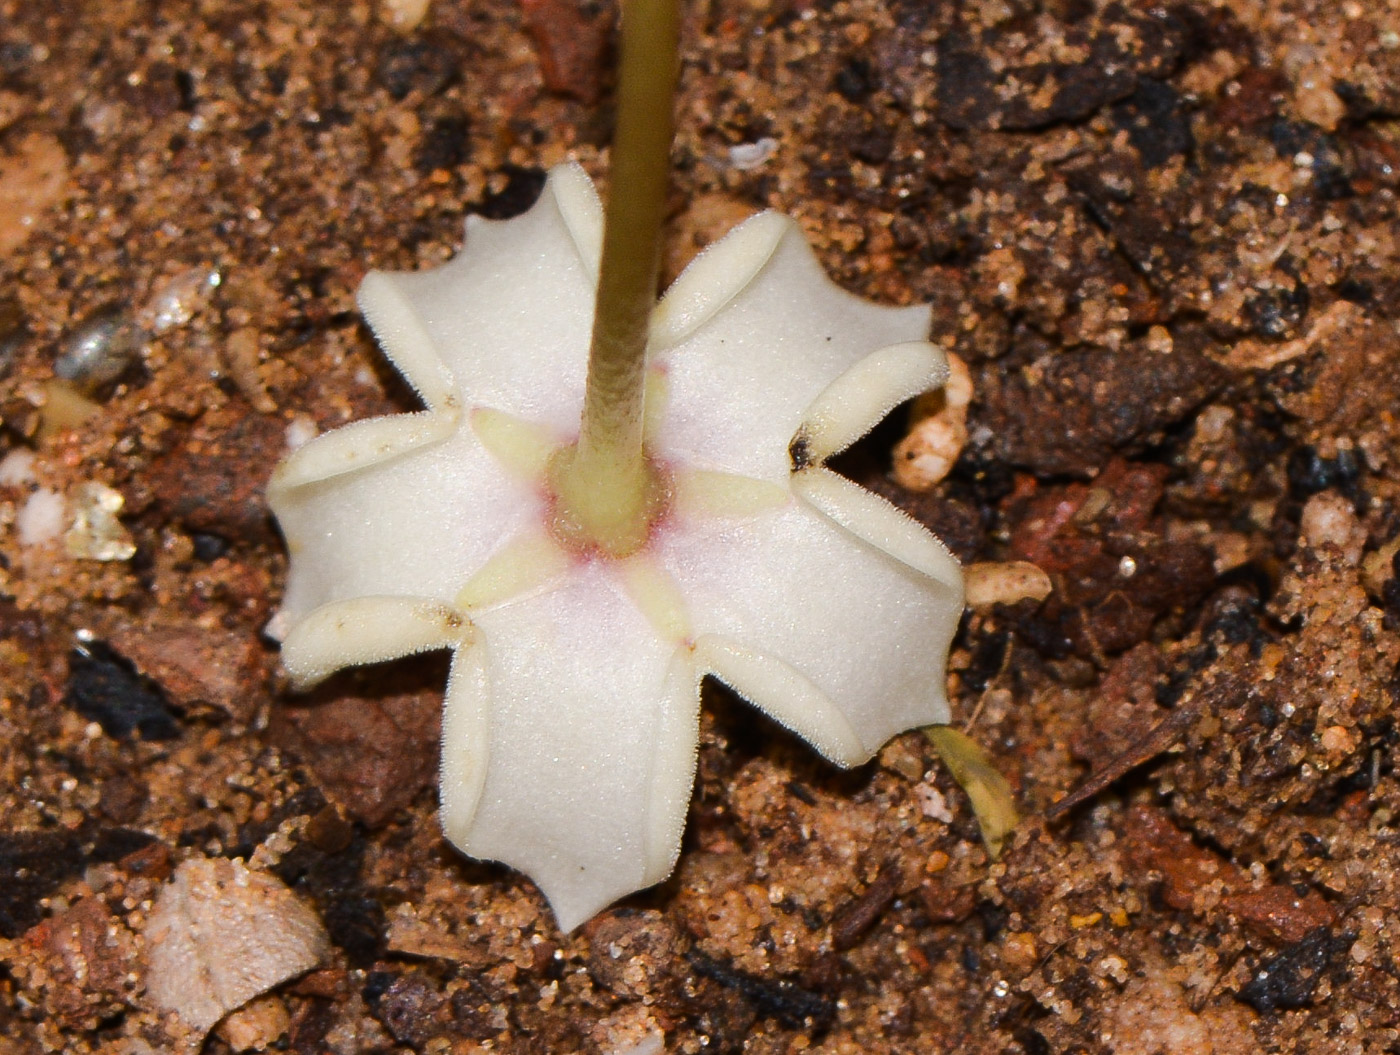 Image of genus Hoya specimen.